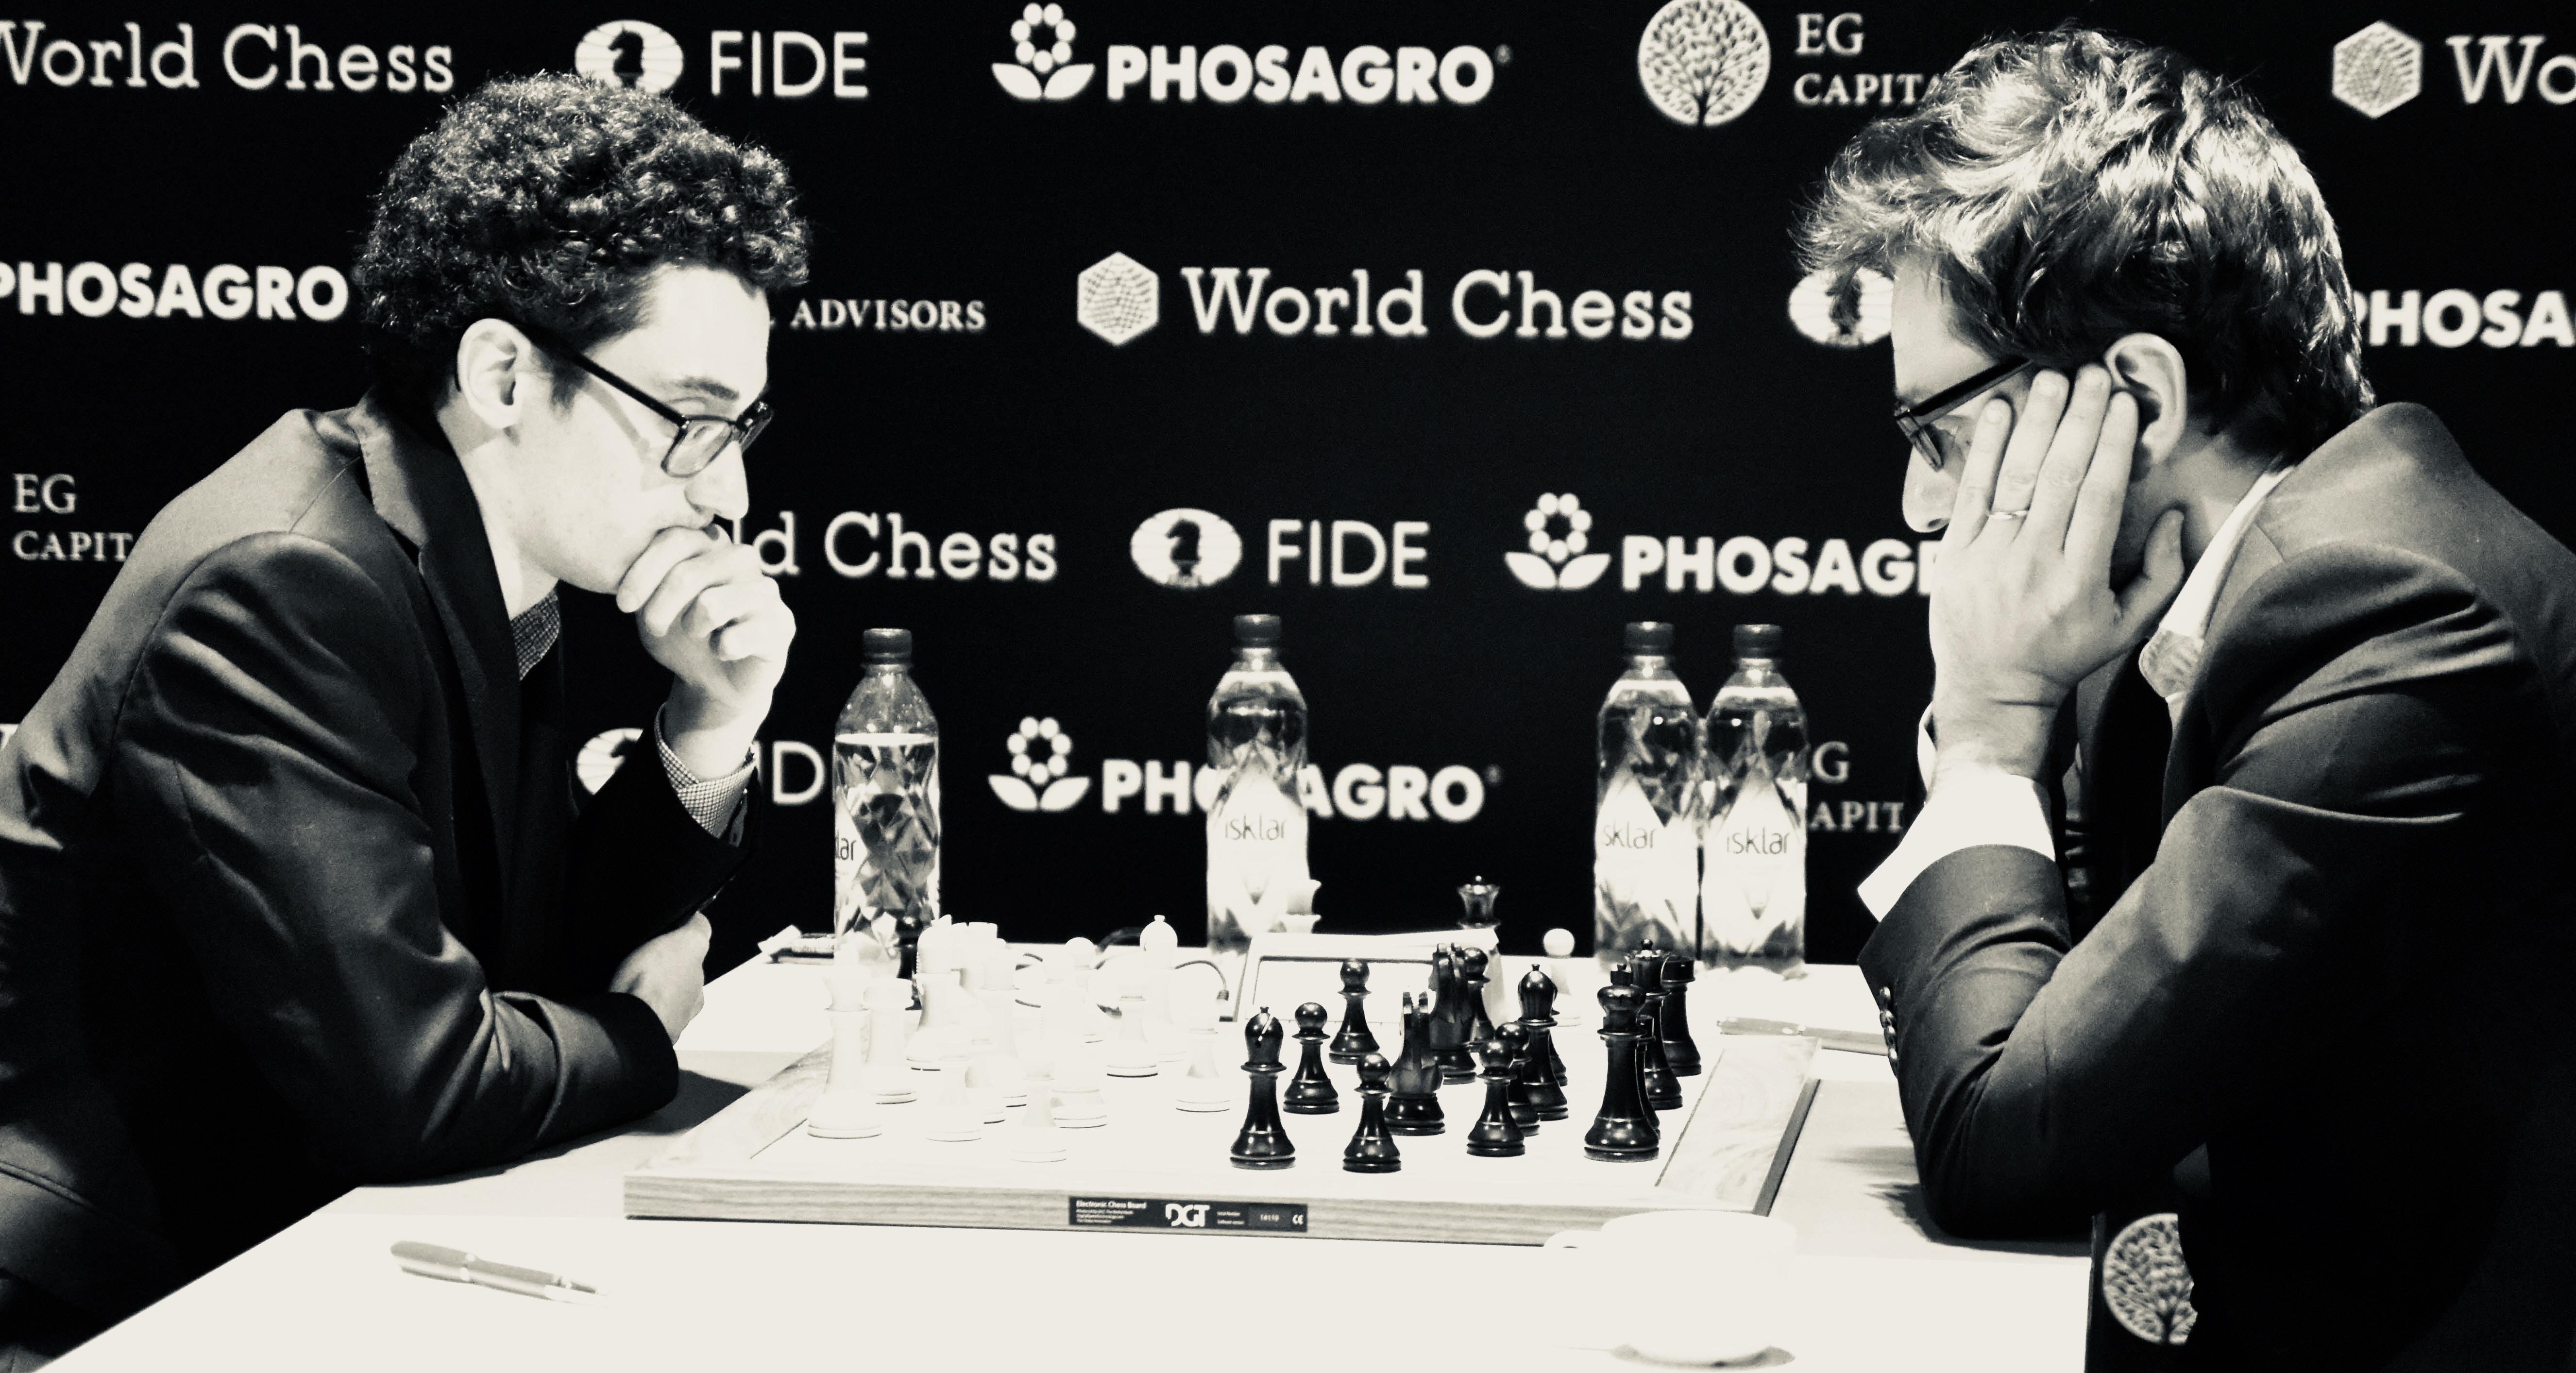 Fabiano Caruana to rejoin USCF - The Chess Drum